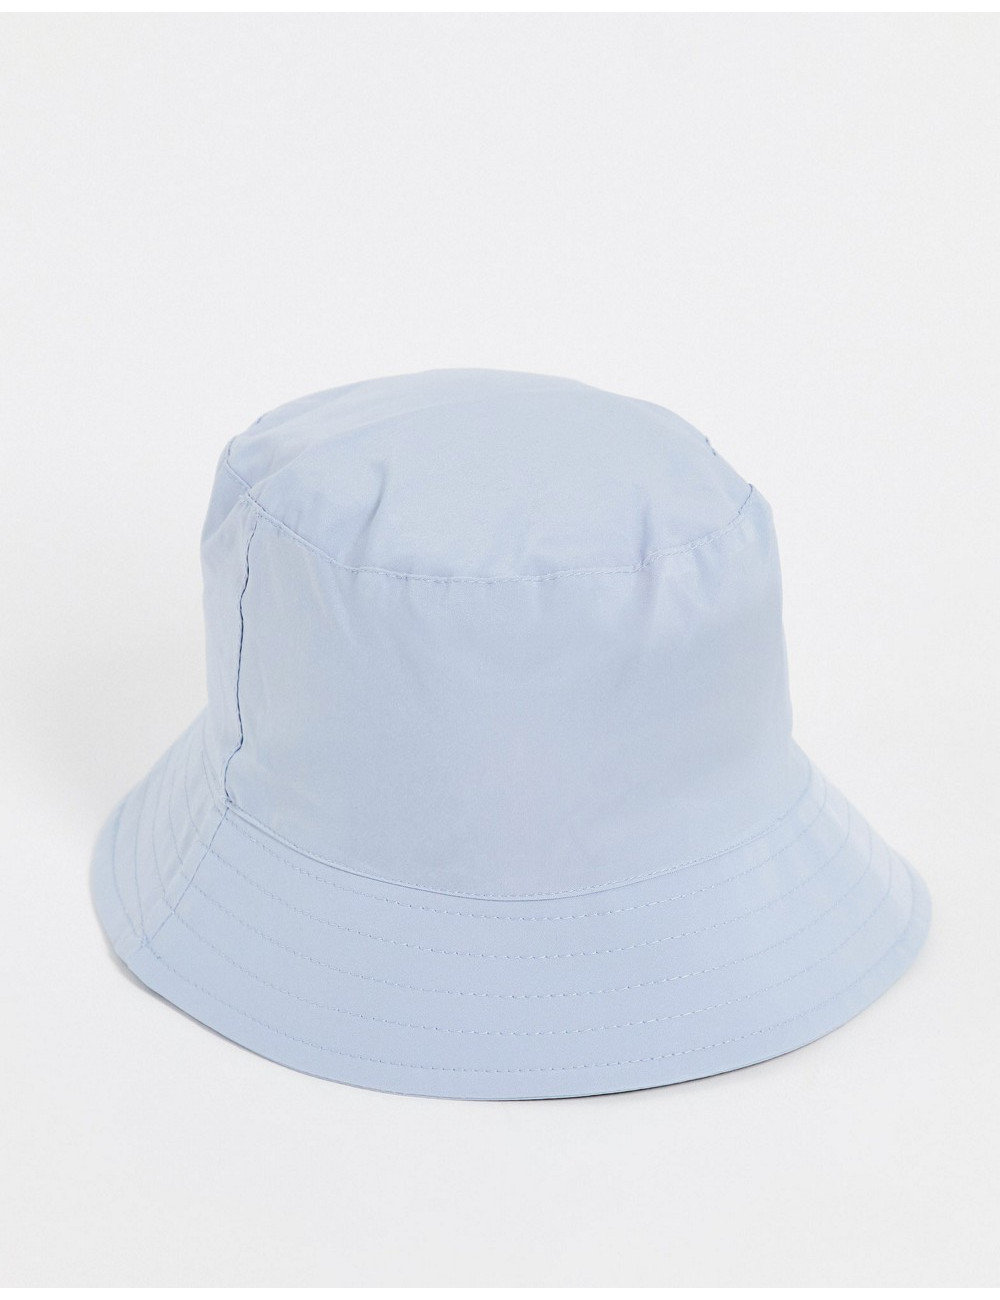 Pieces bucket hat in blue